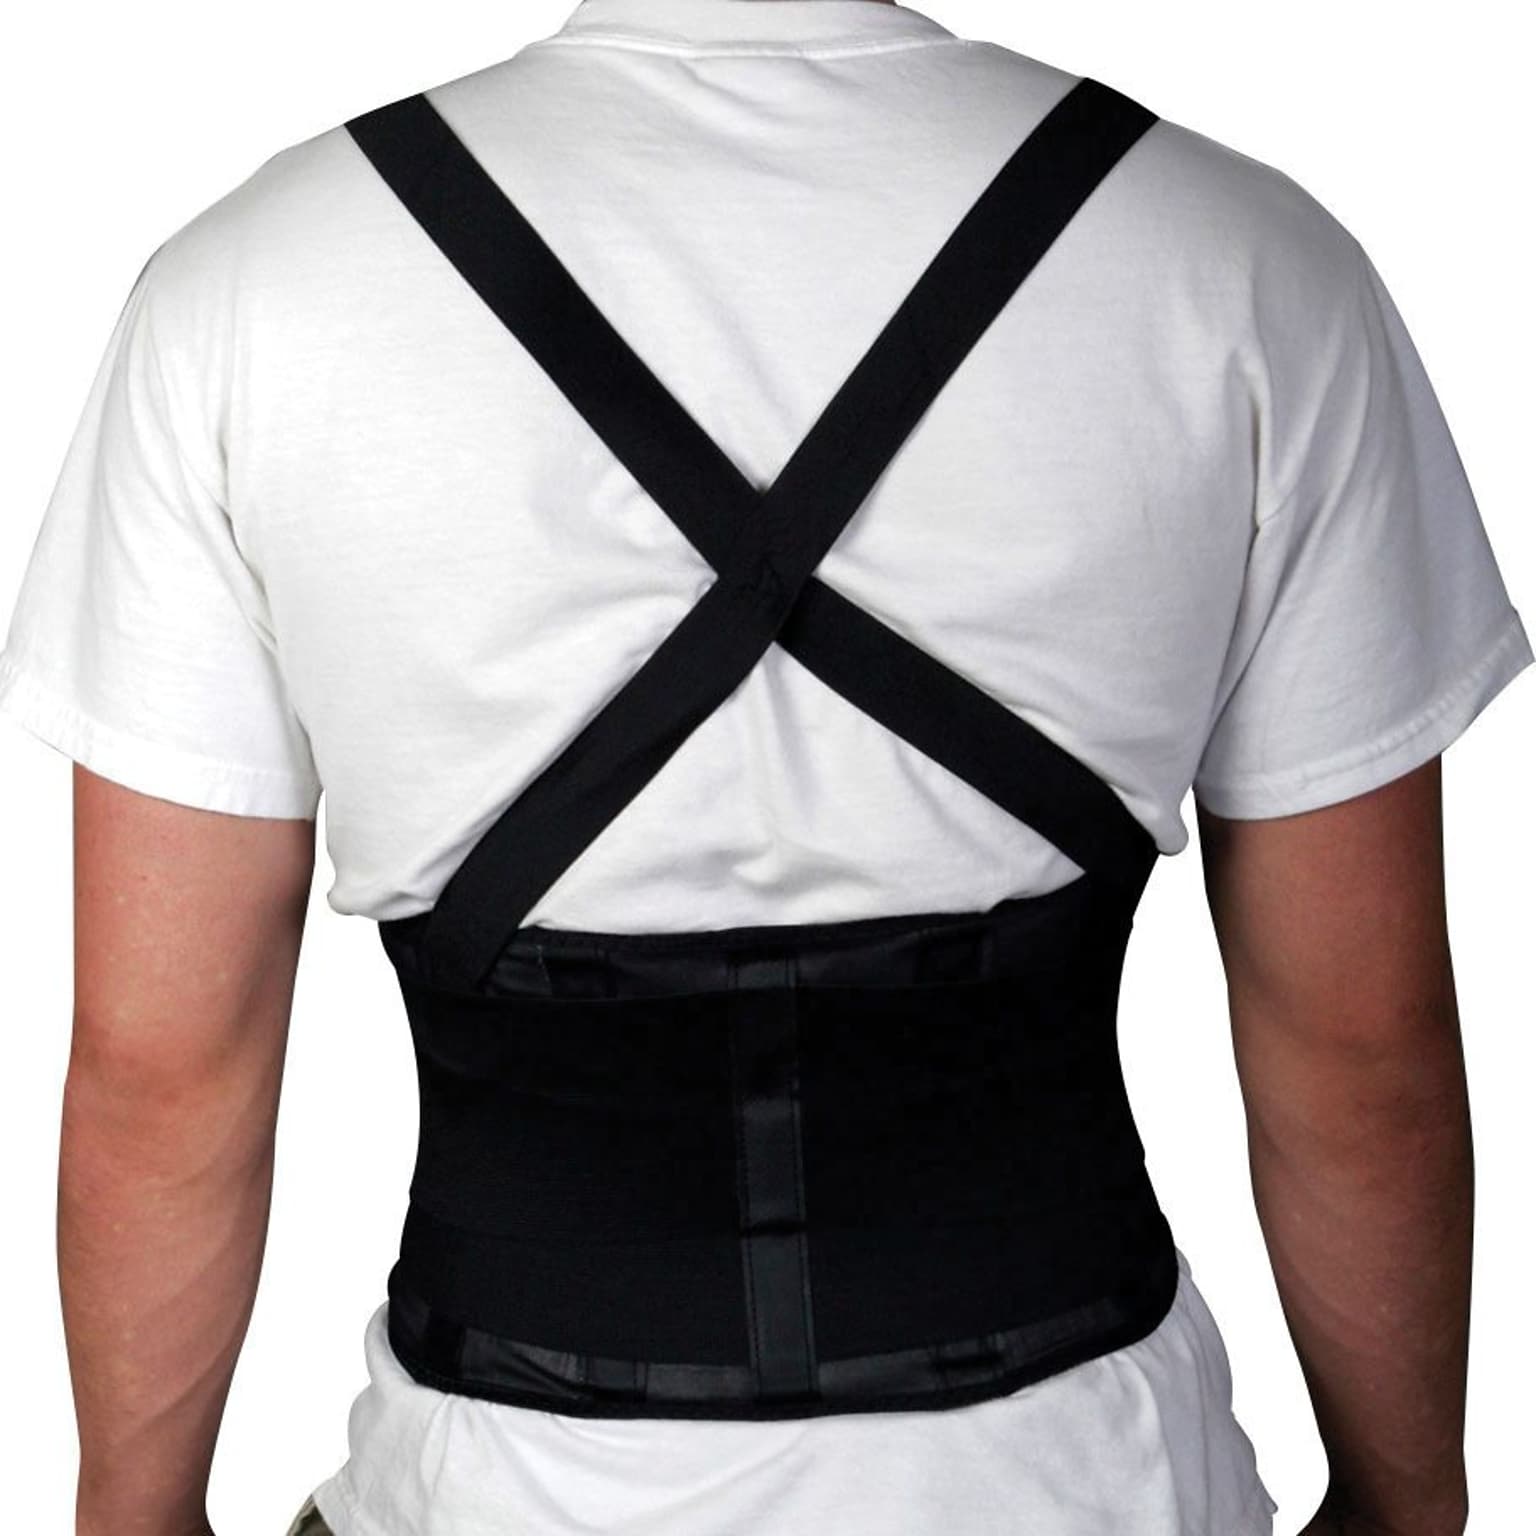 Medline Standard Back Support with Suspenders, Black, Medium, 30 - 34 L x 10 H, Each